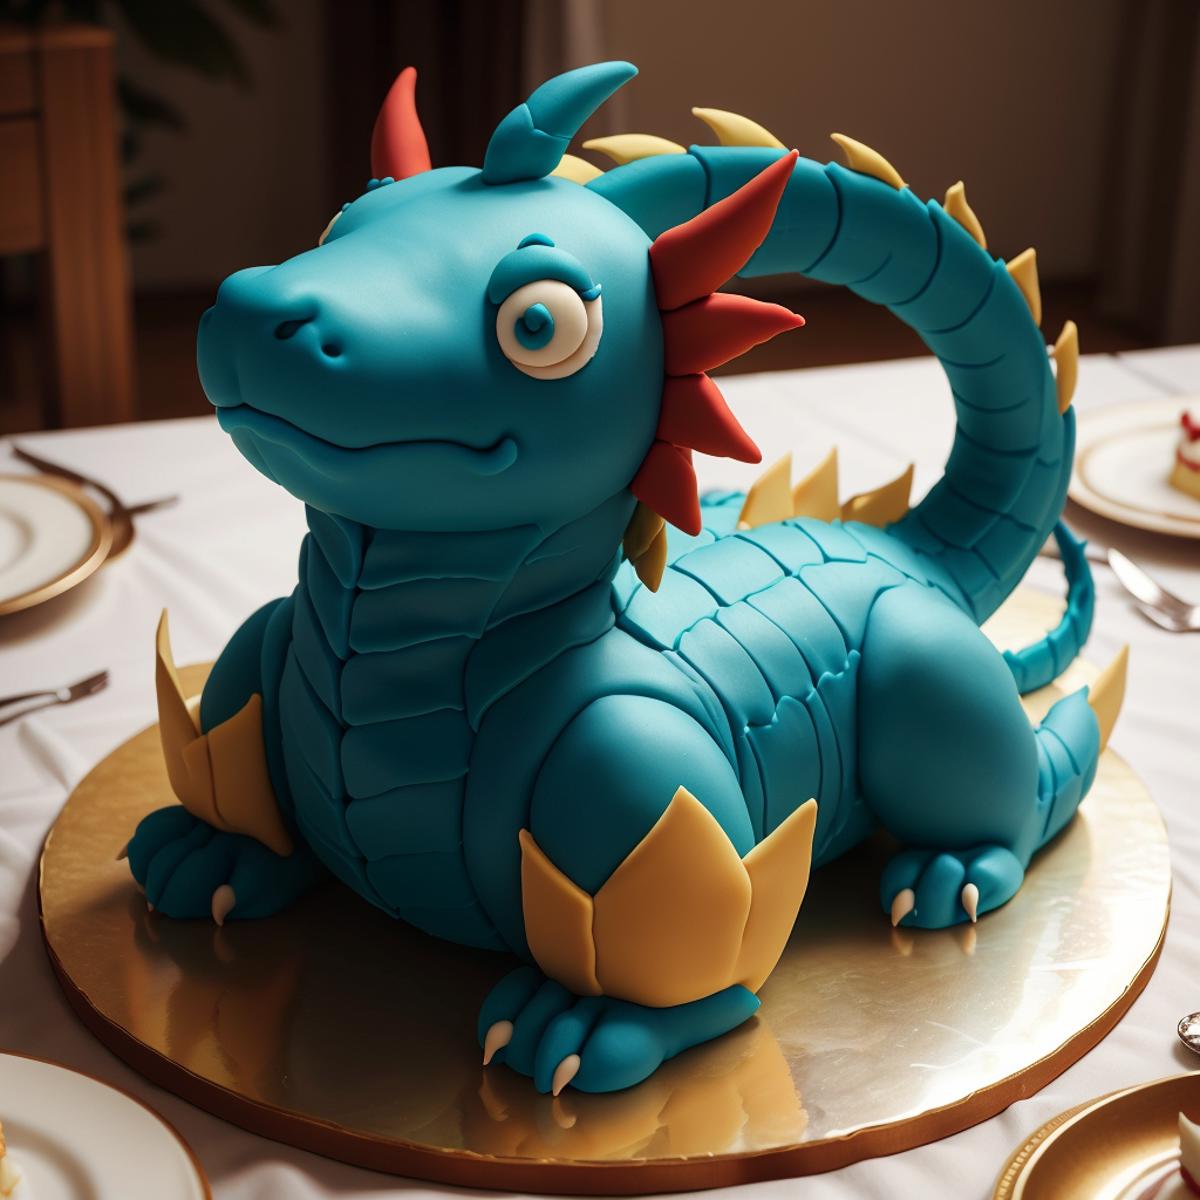 Cake Style - Custom shaped cakes! image by mnemic